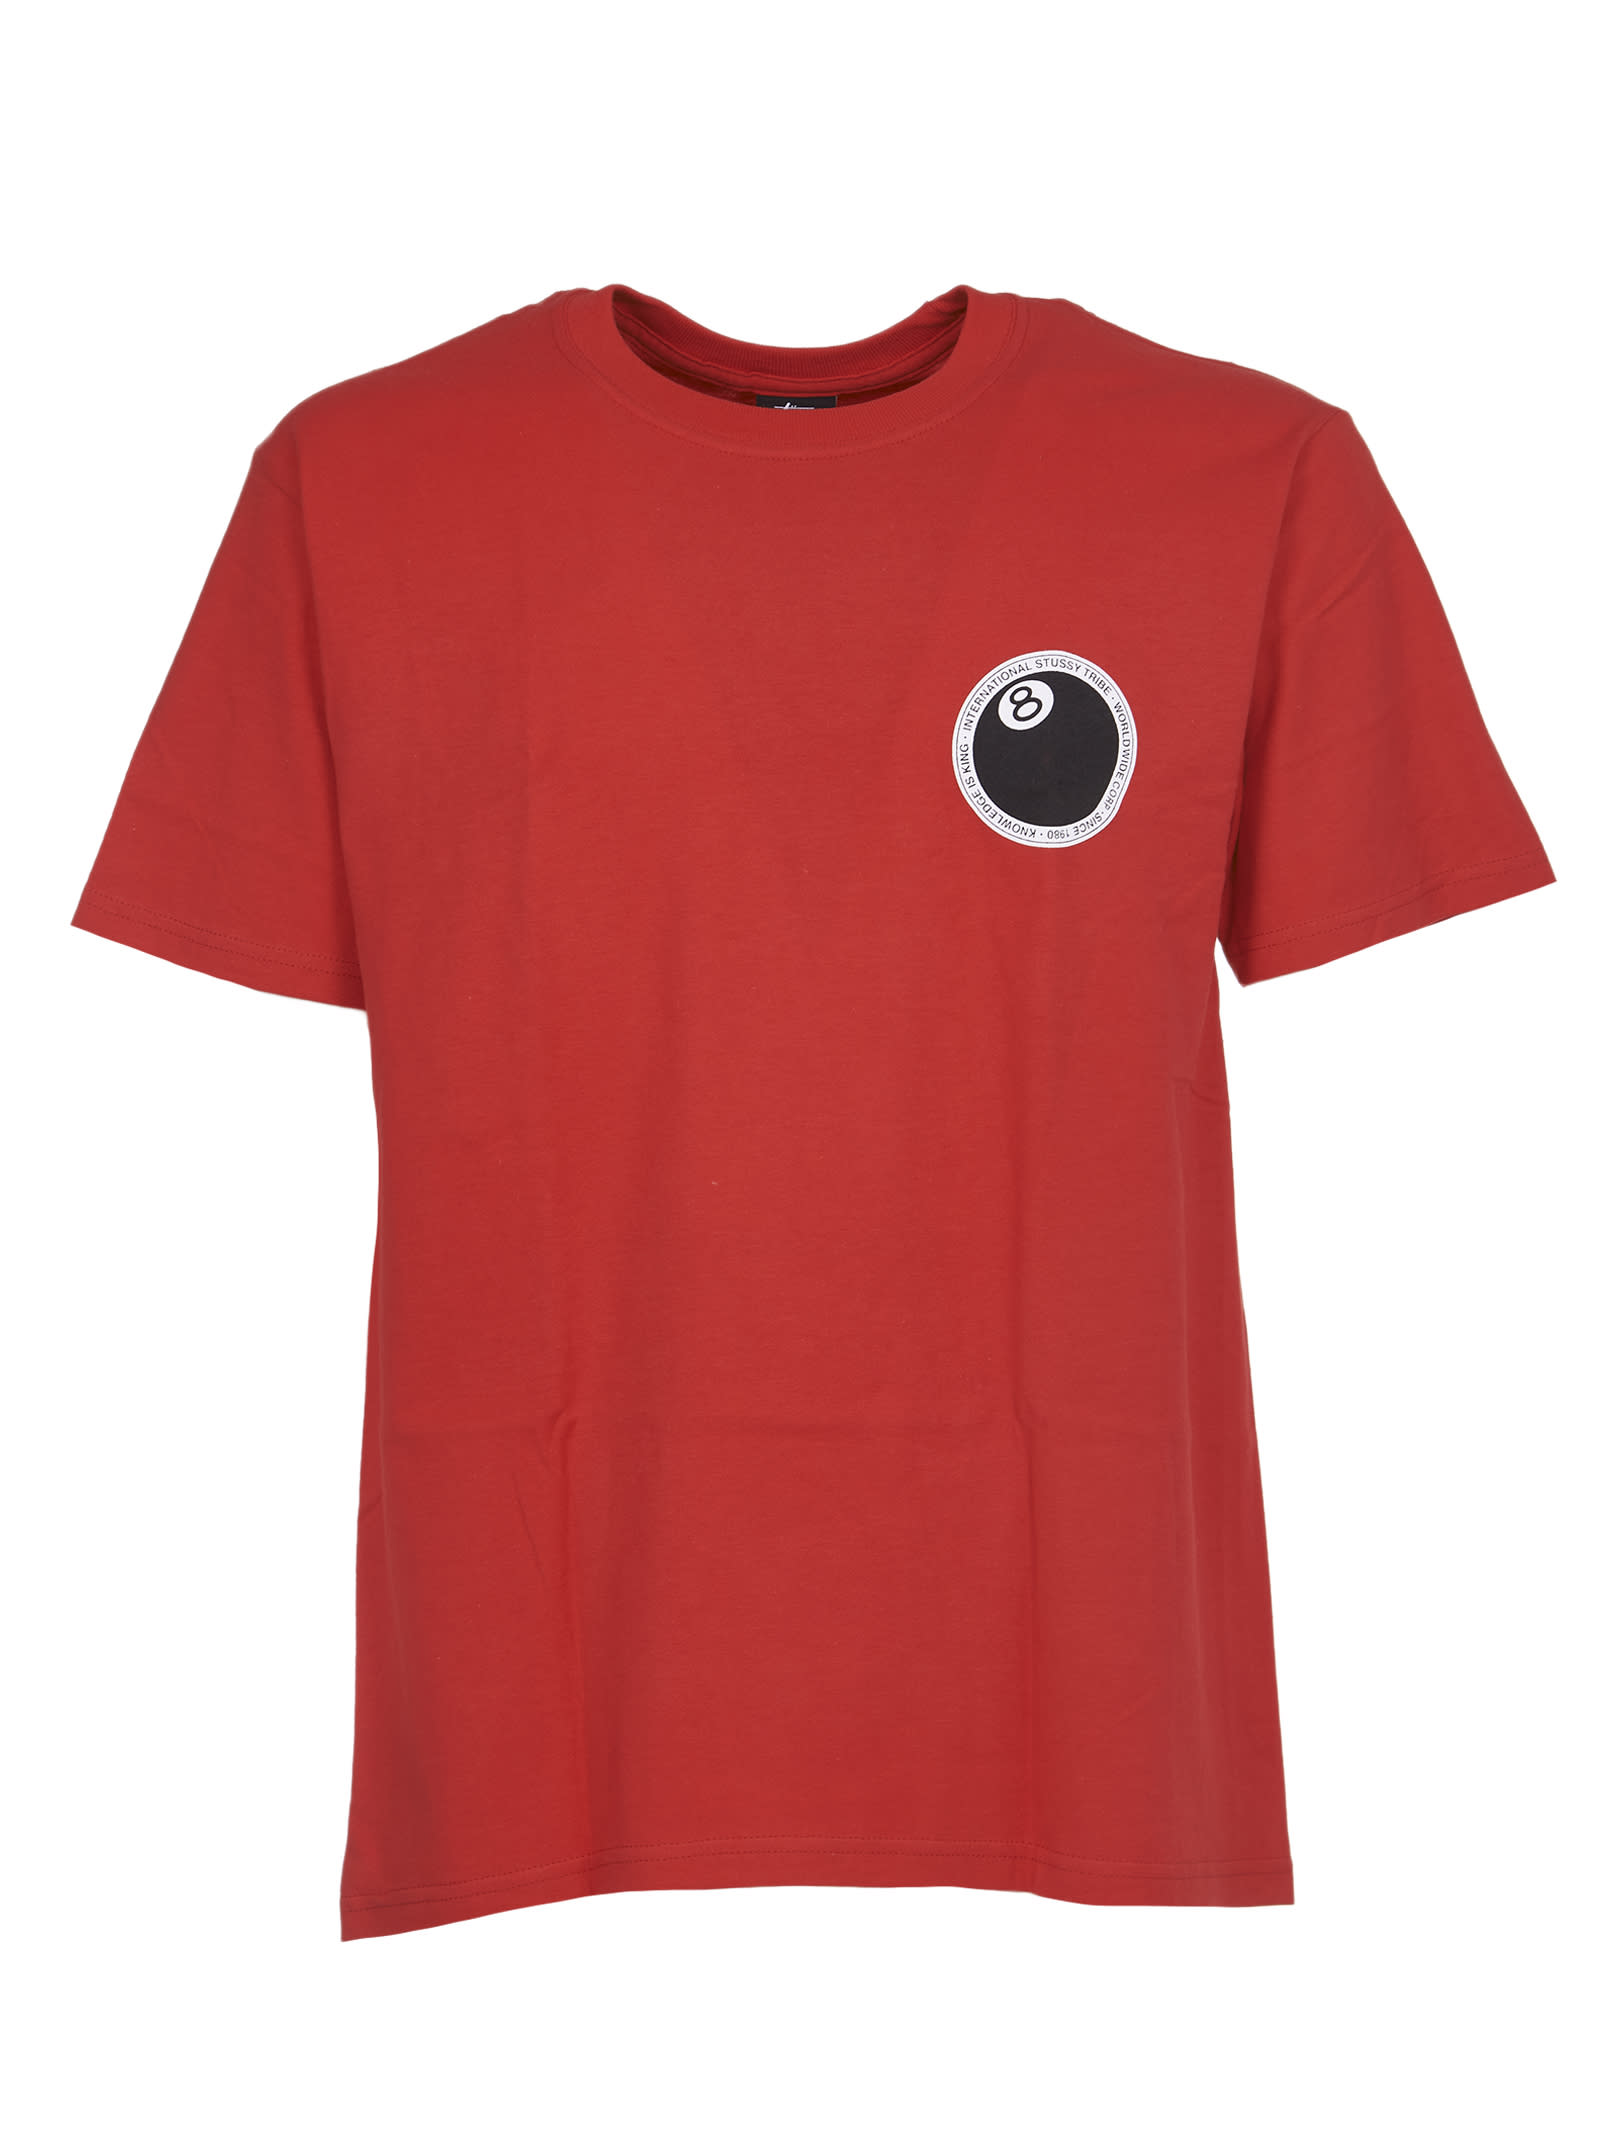 Stussy Red Bowl T-shirt